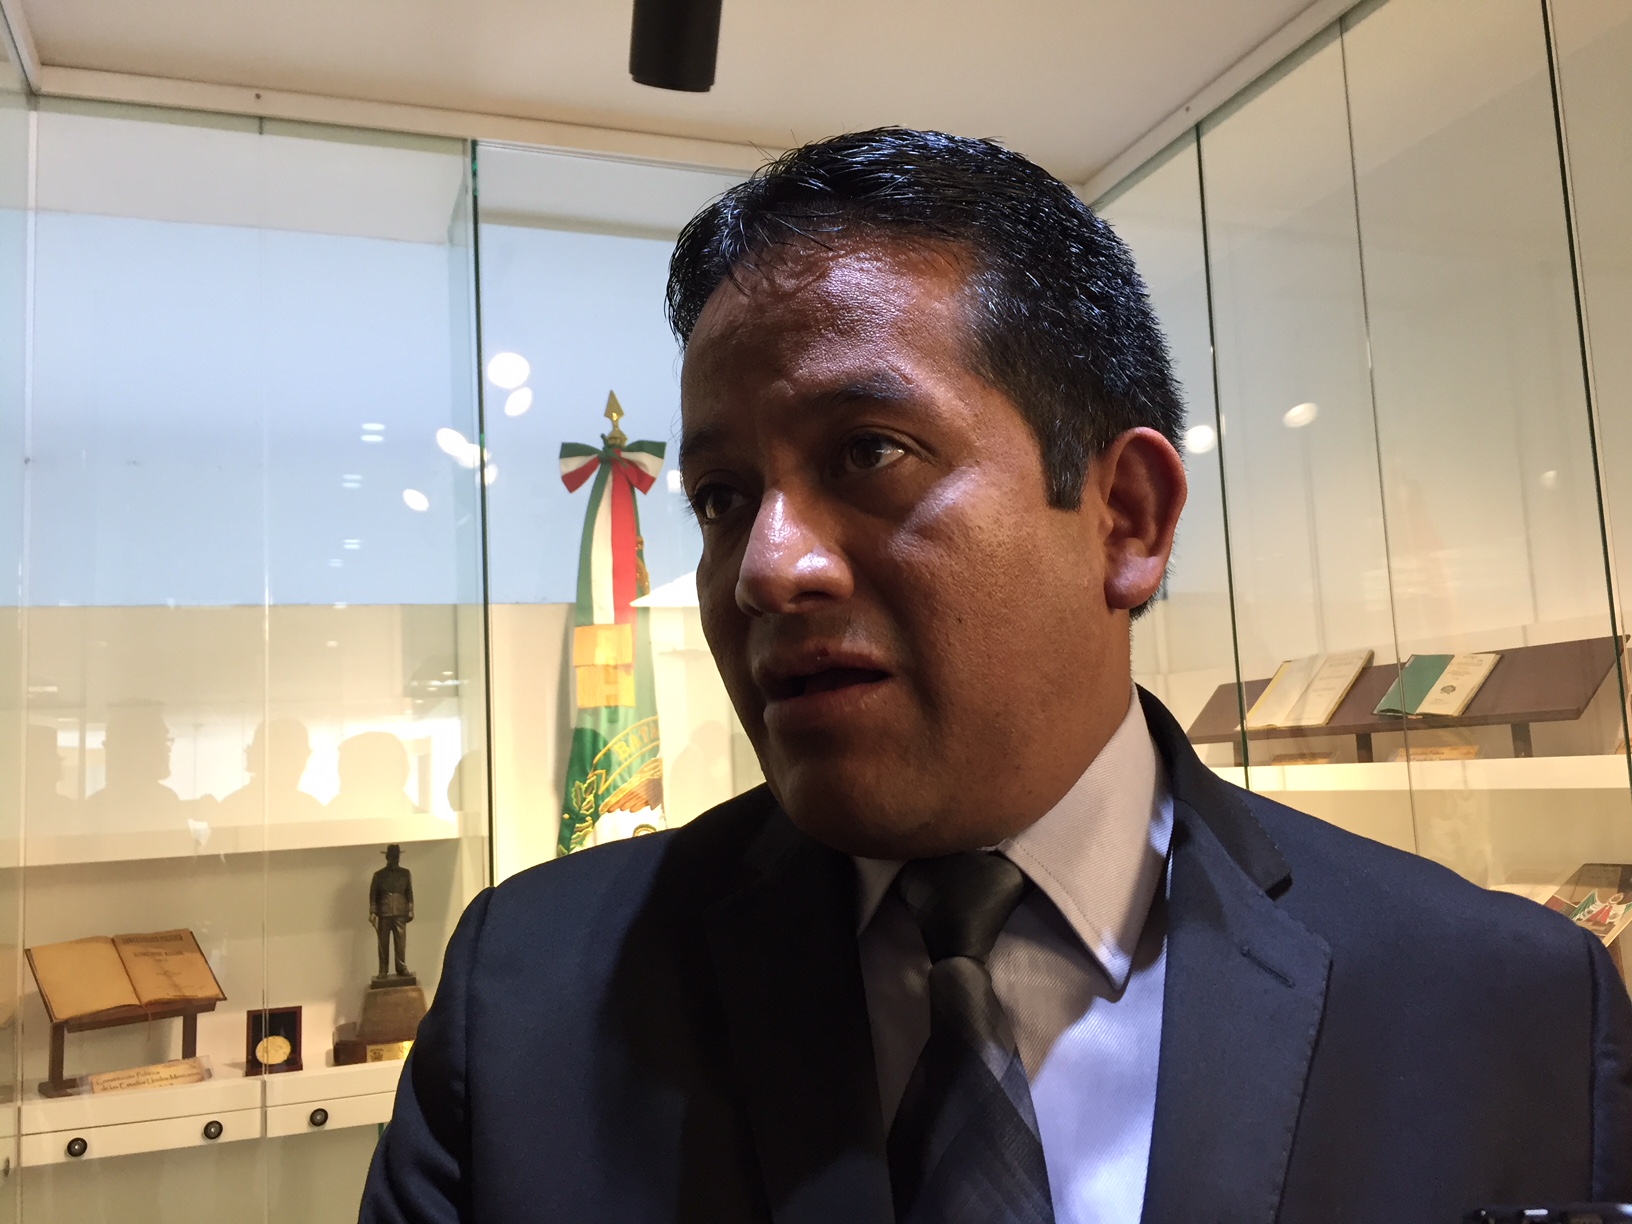  “Ningún municipio de Querétaro ha mostrado interés en aumentar impuestos”: Eric Salas